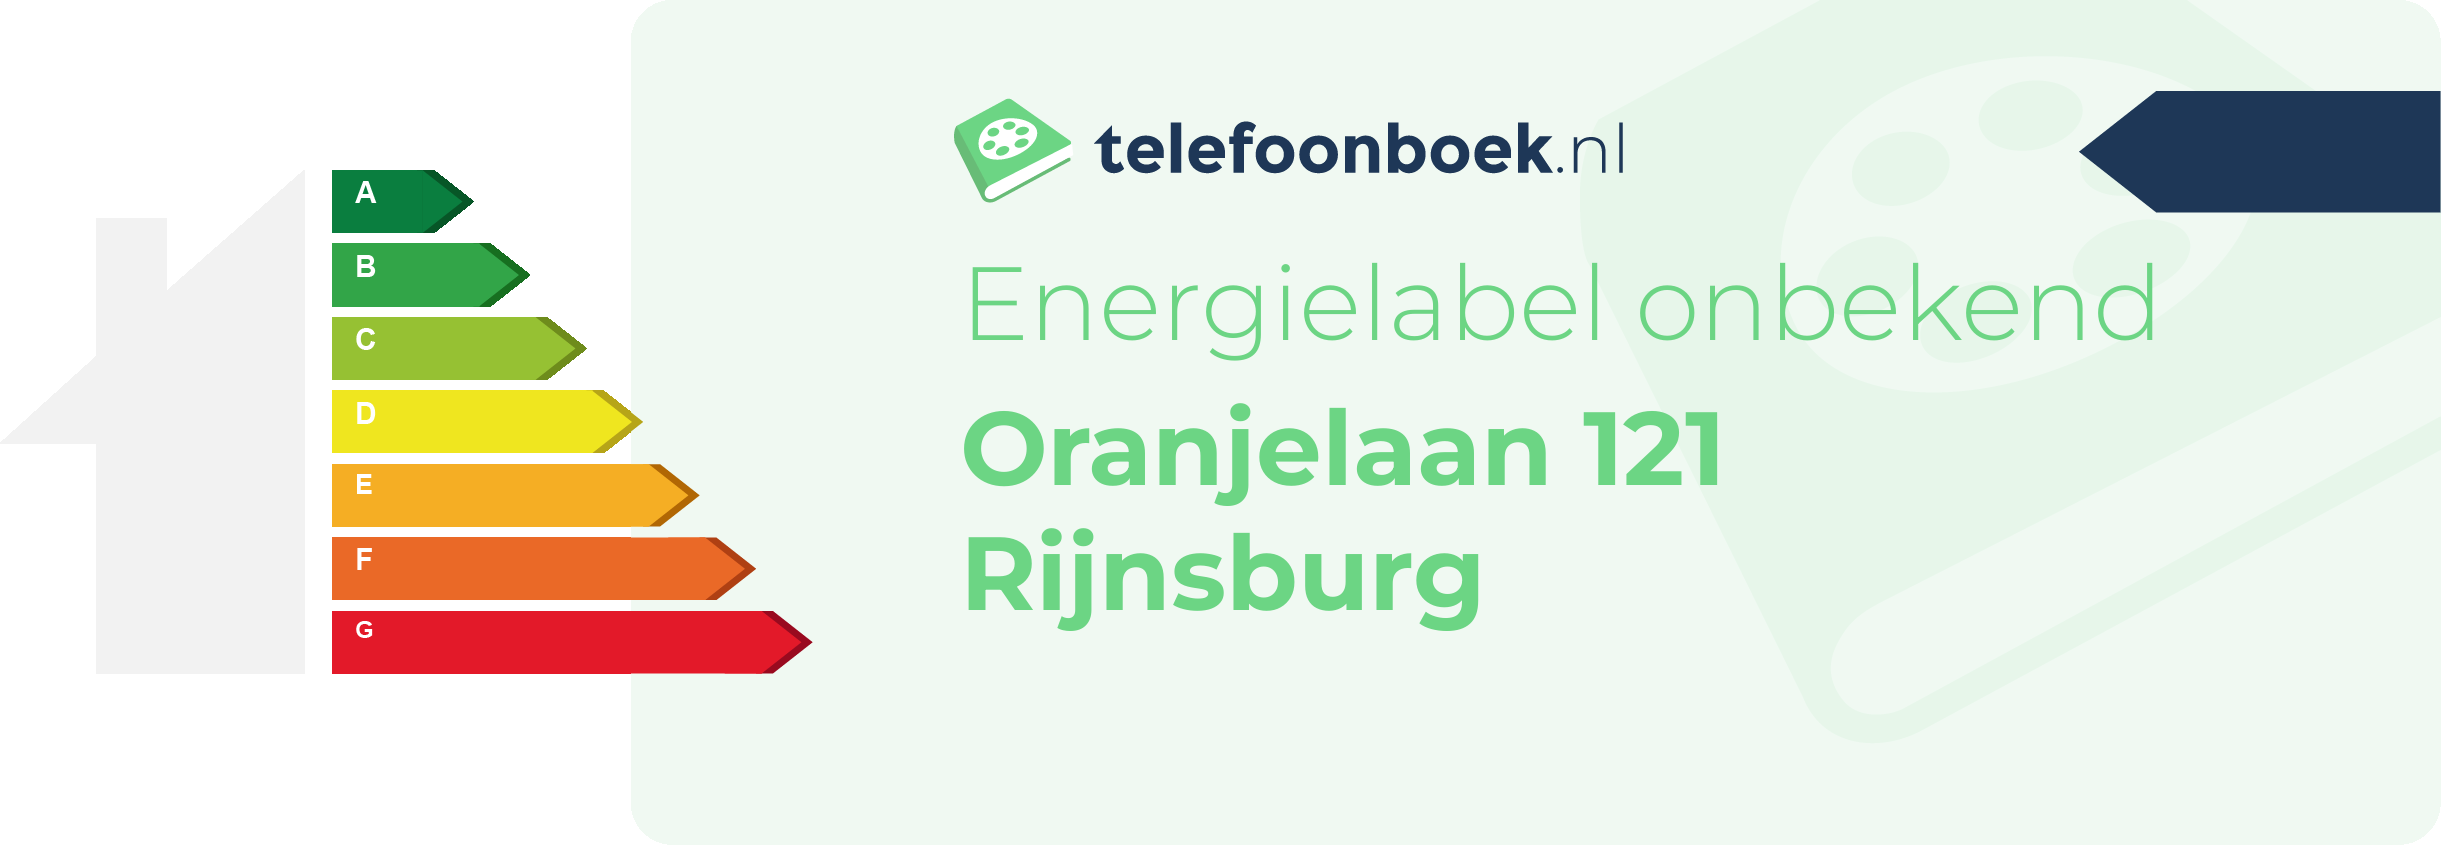 Energielabel Oranjelaan 121 Rijnsburg